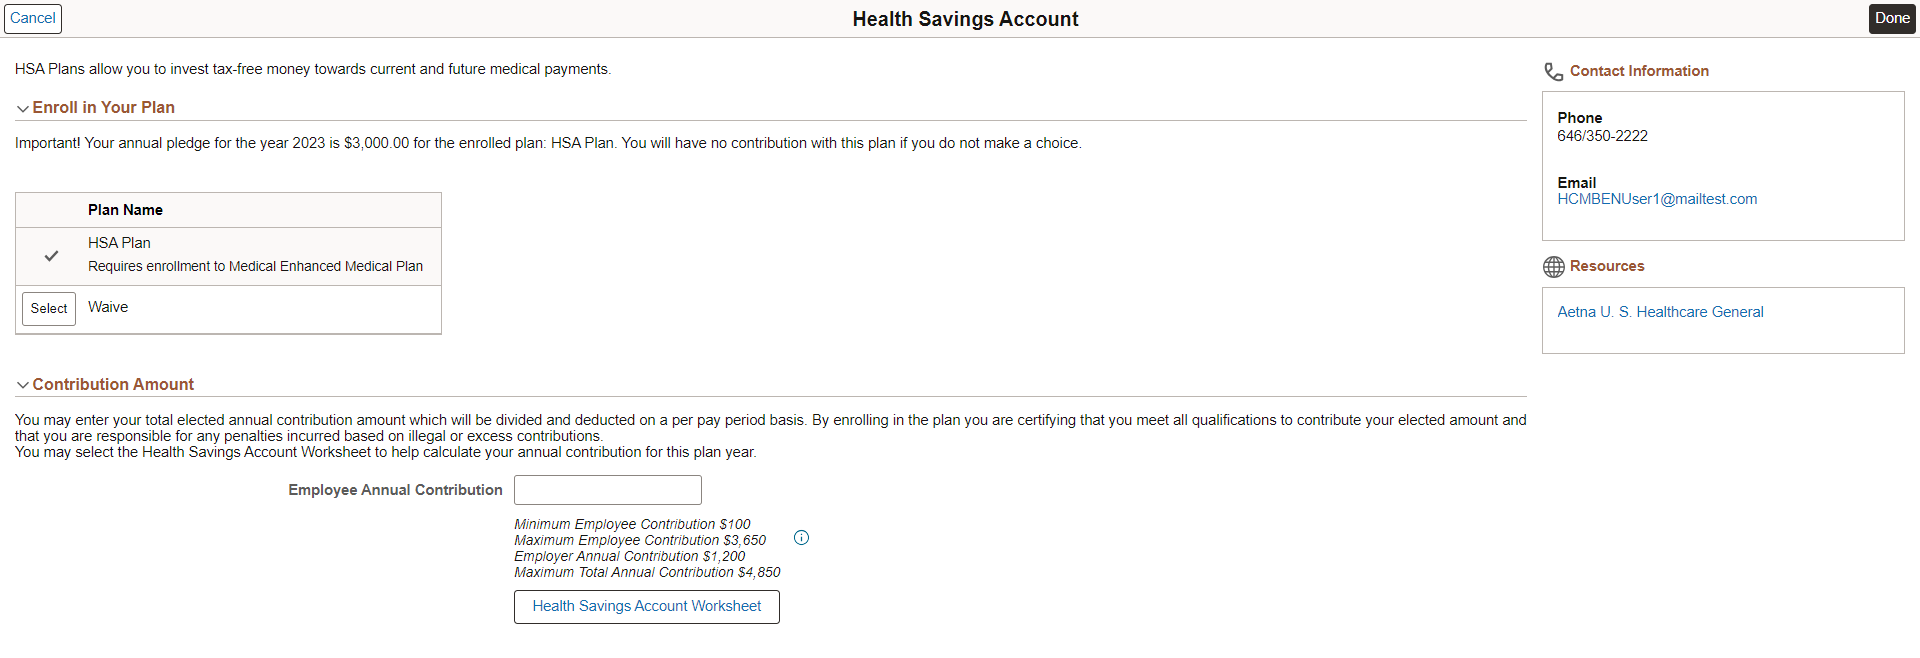 Health Savings Account Page